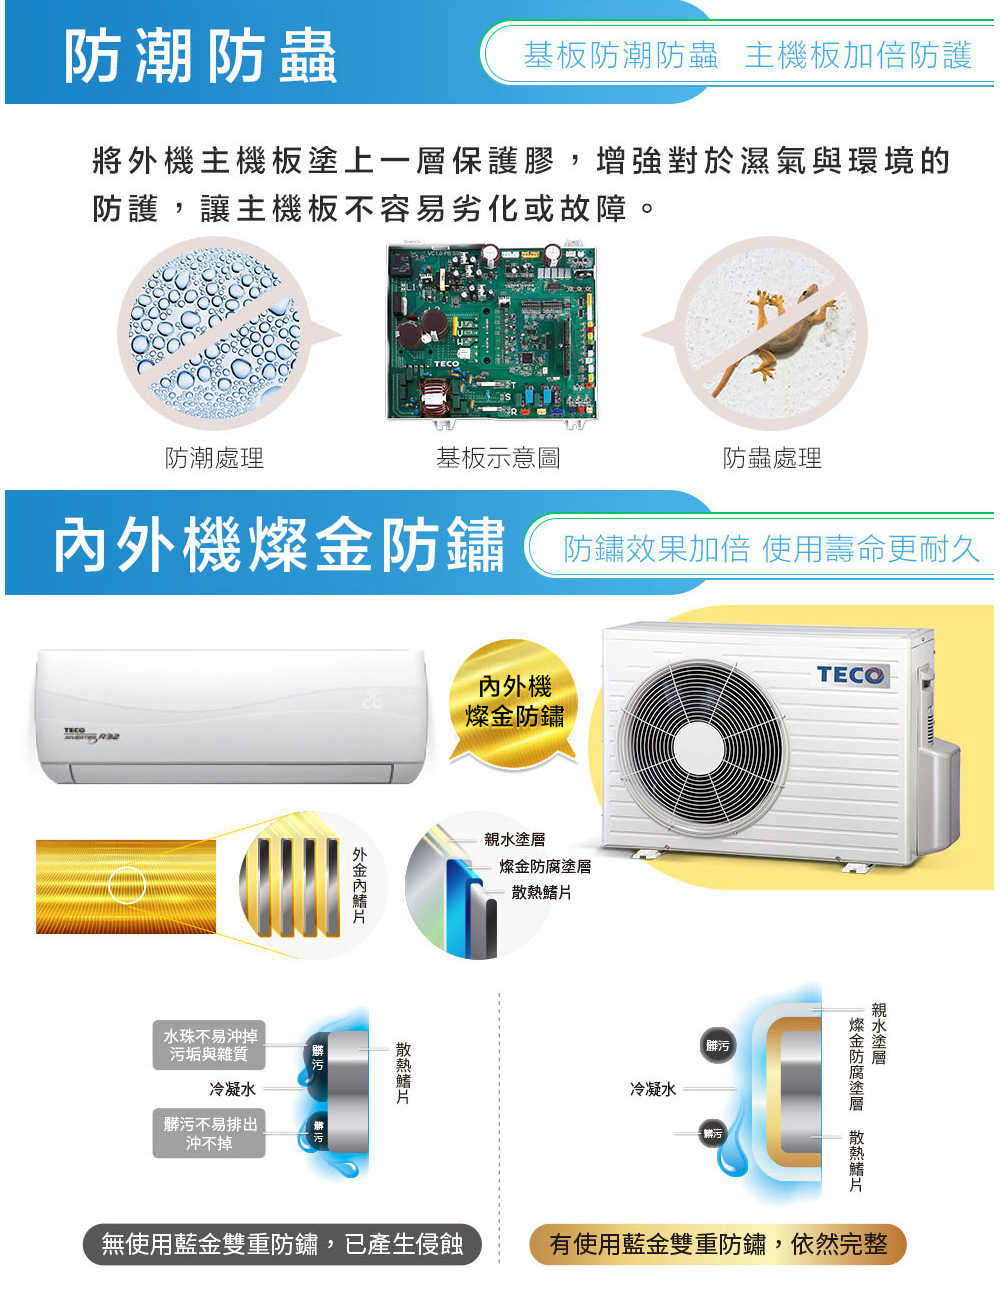 【TECO 東元】8-10 坪 精品變頻冷暖分離式冷氣 MA50IH-GA2/MS50IH-GA2